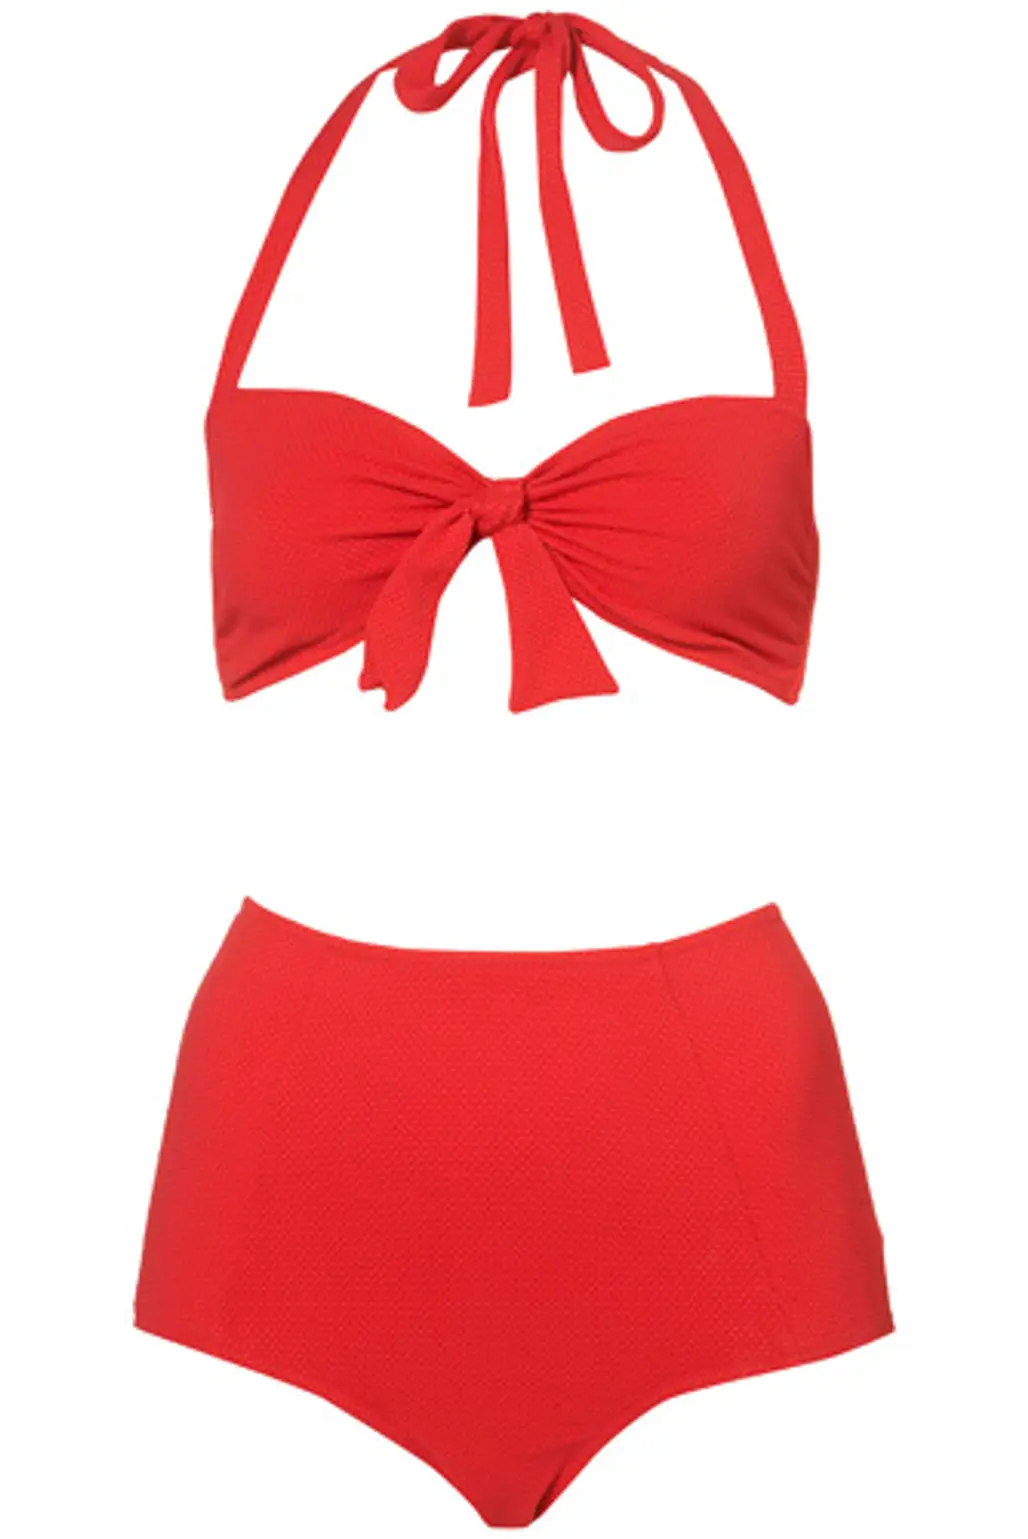 Topshop Red Textured Bikini